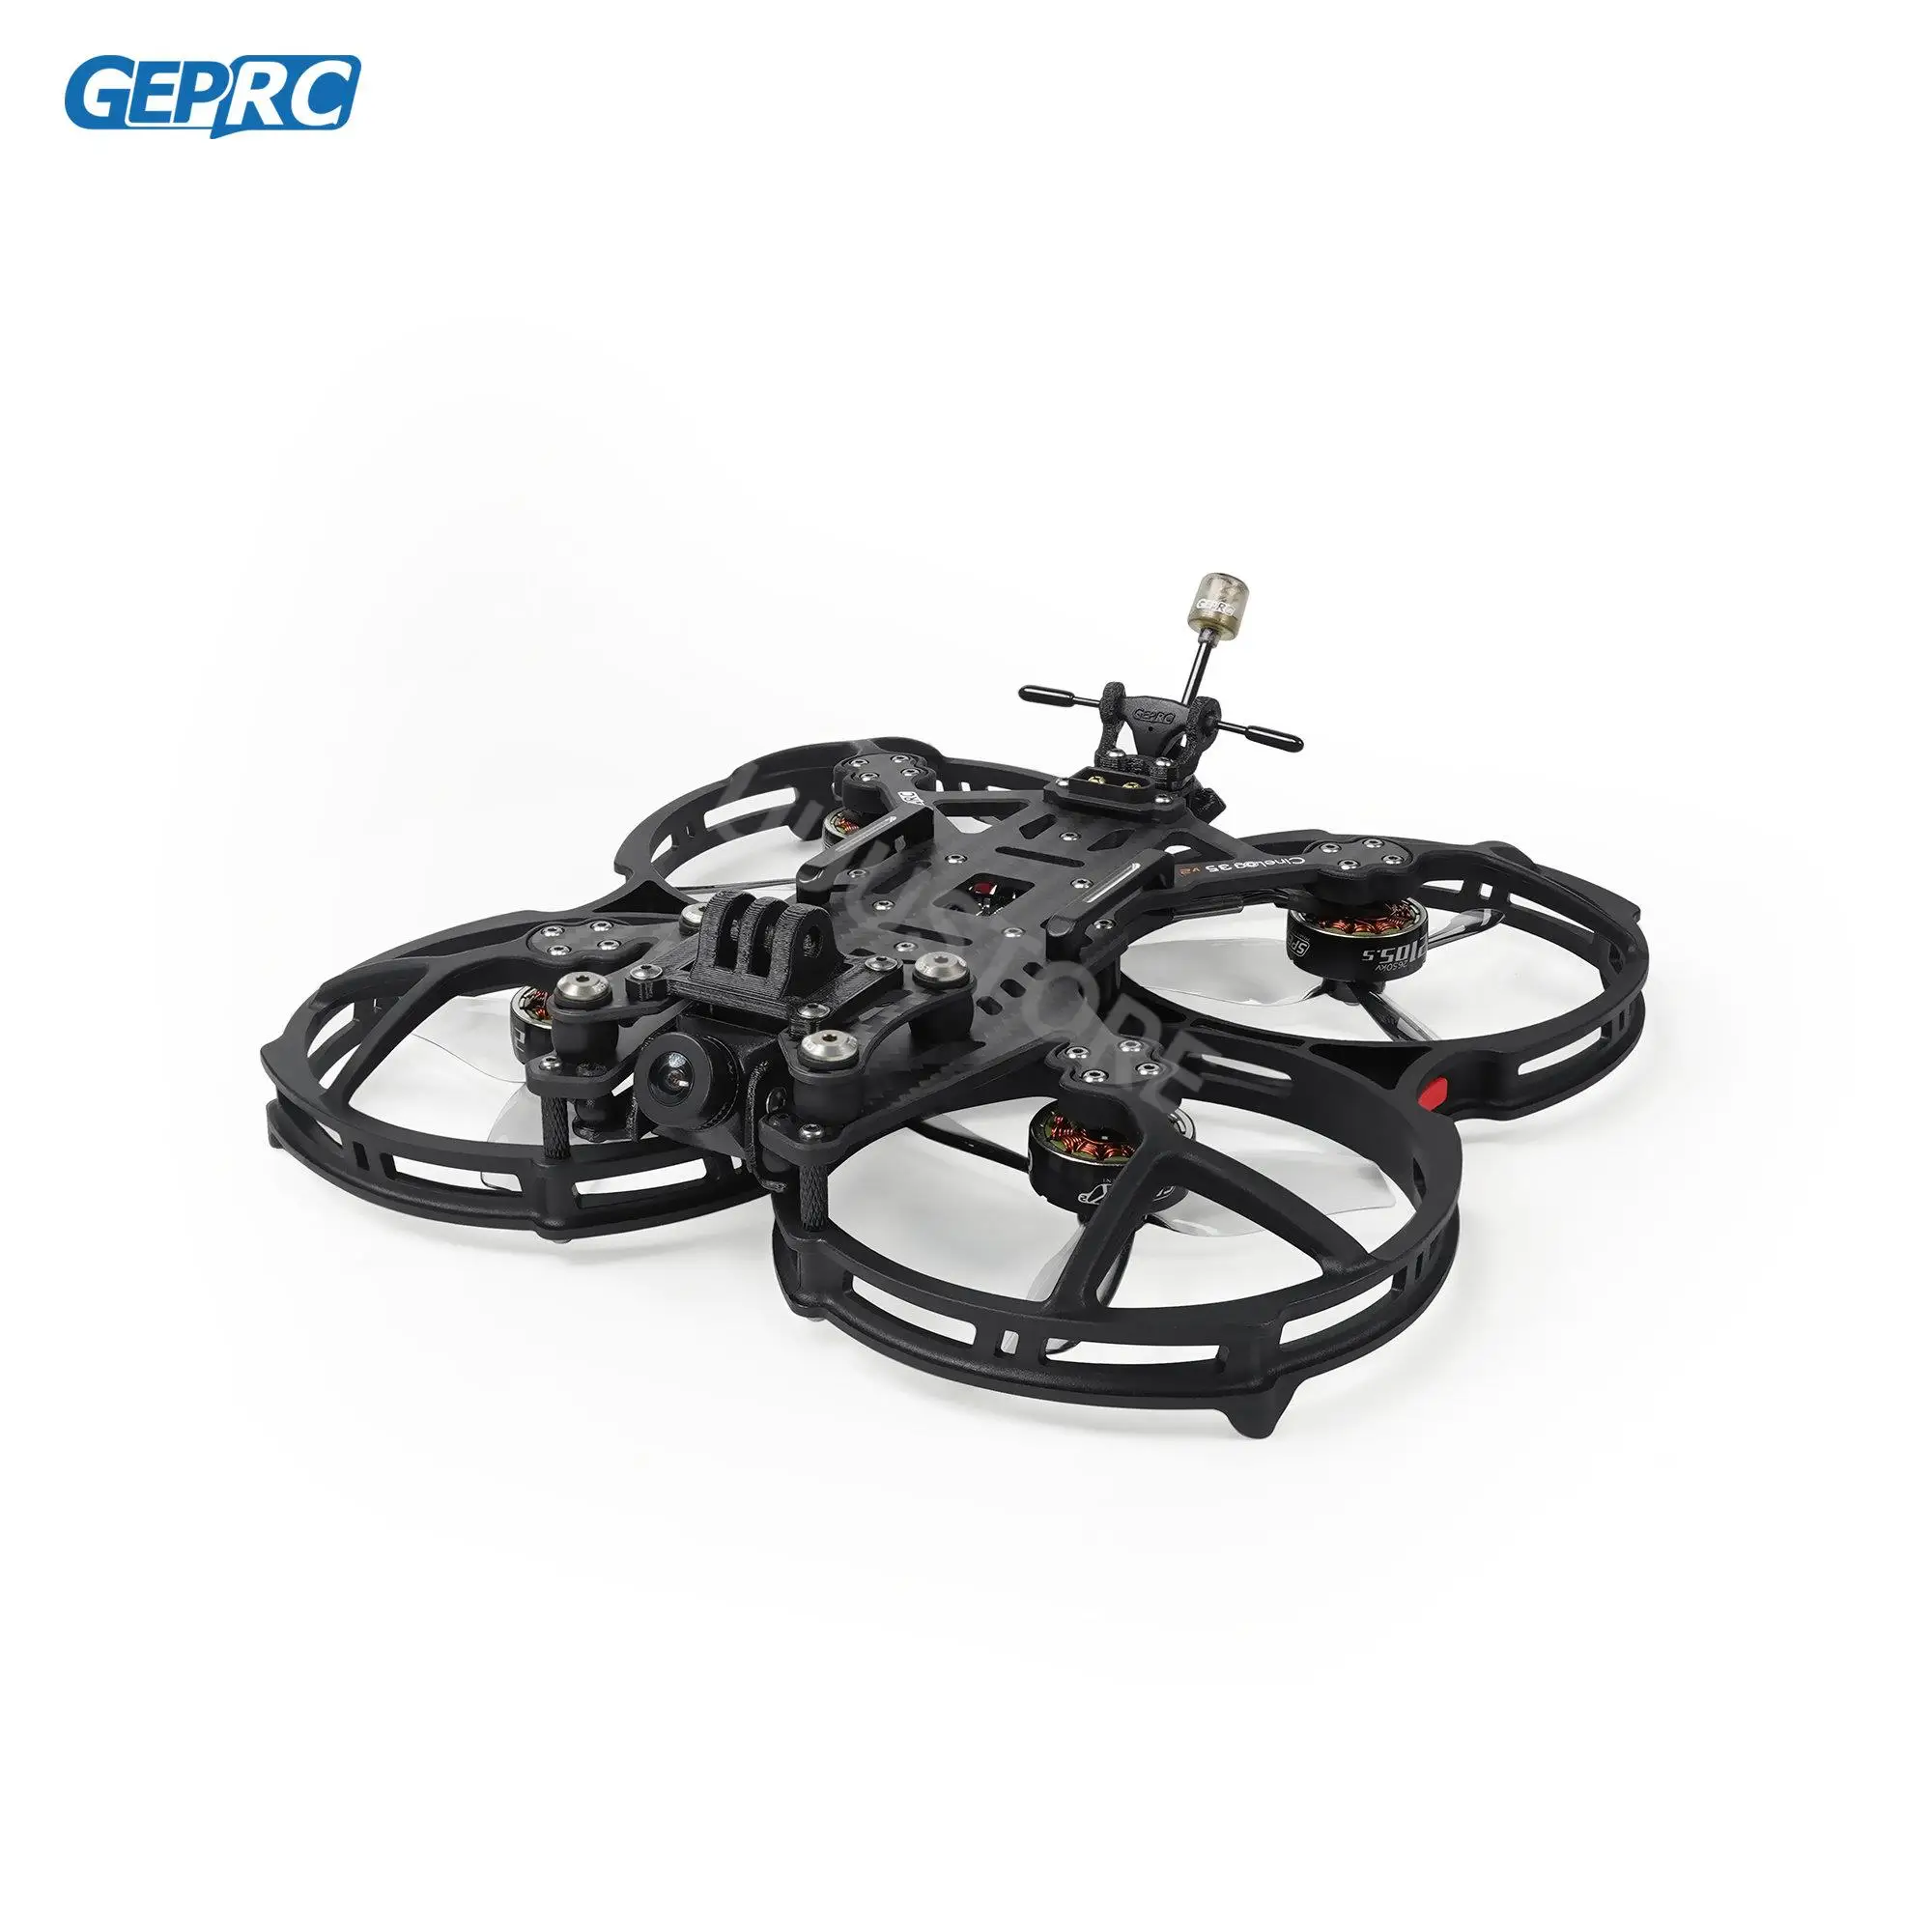 

GEPRC Cinelog35 V2 3.5 inch Analog FPV Cinewhoop Drone F722-45A AIO V2 FC 2105.5 Motor 5.8Ghz VTX Caddx Ratel 2 RC Quadcopter